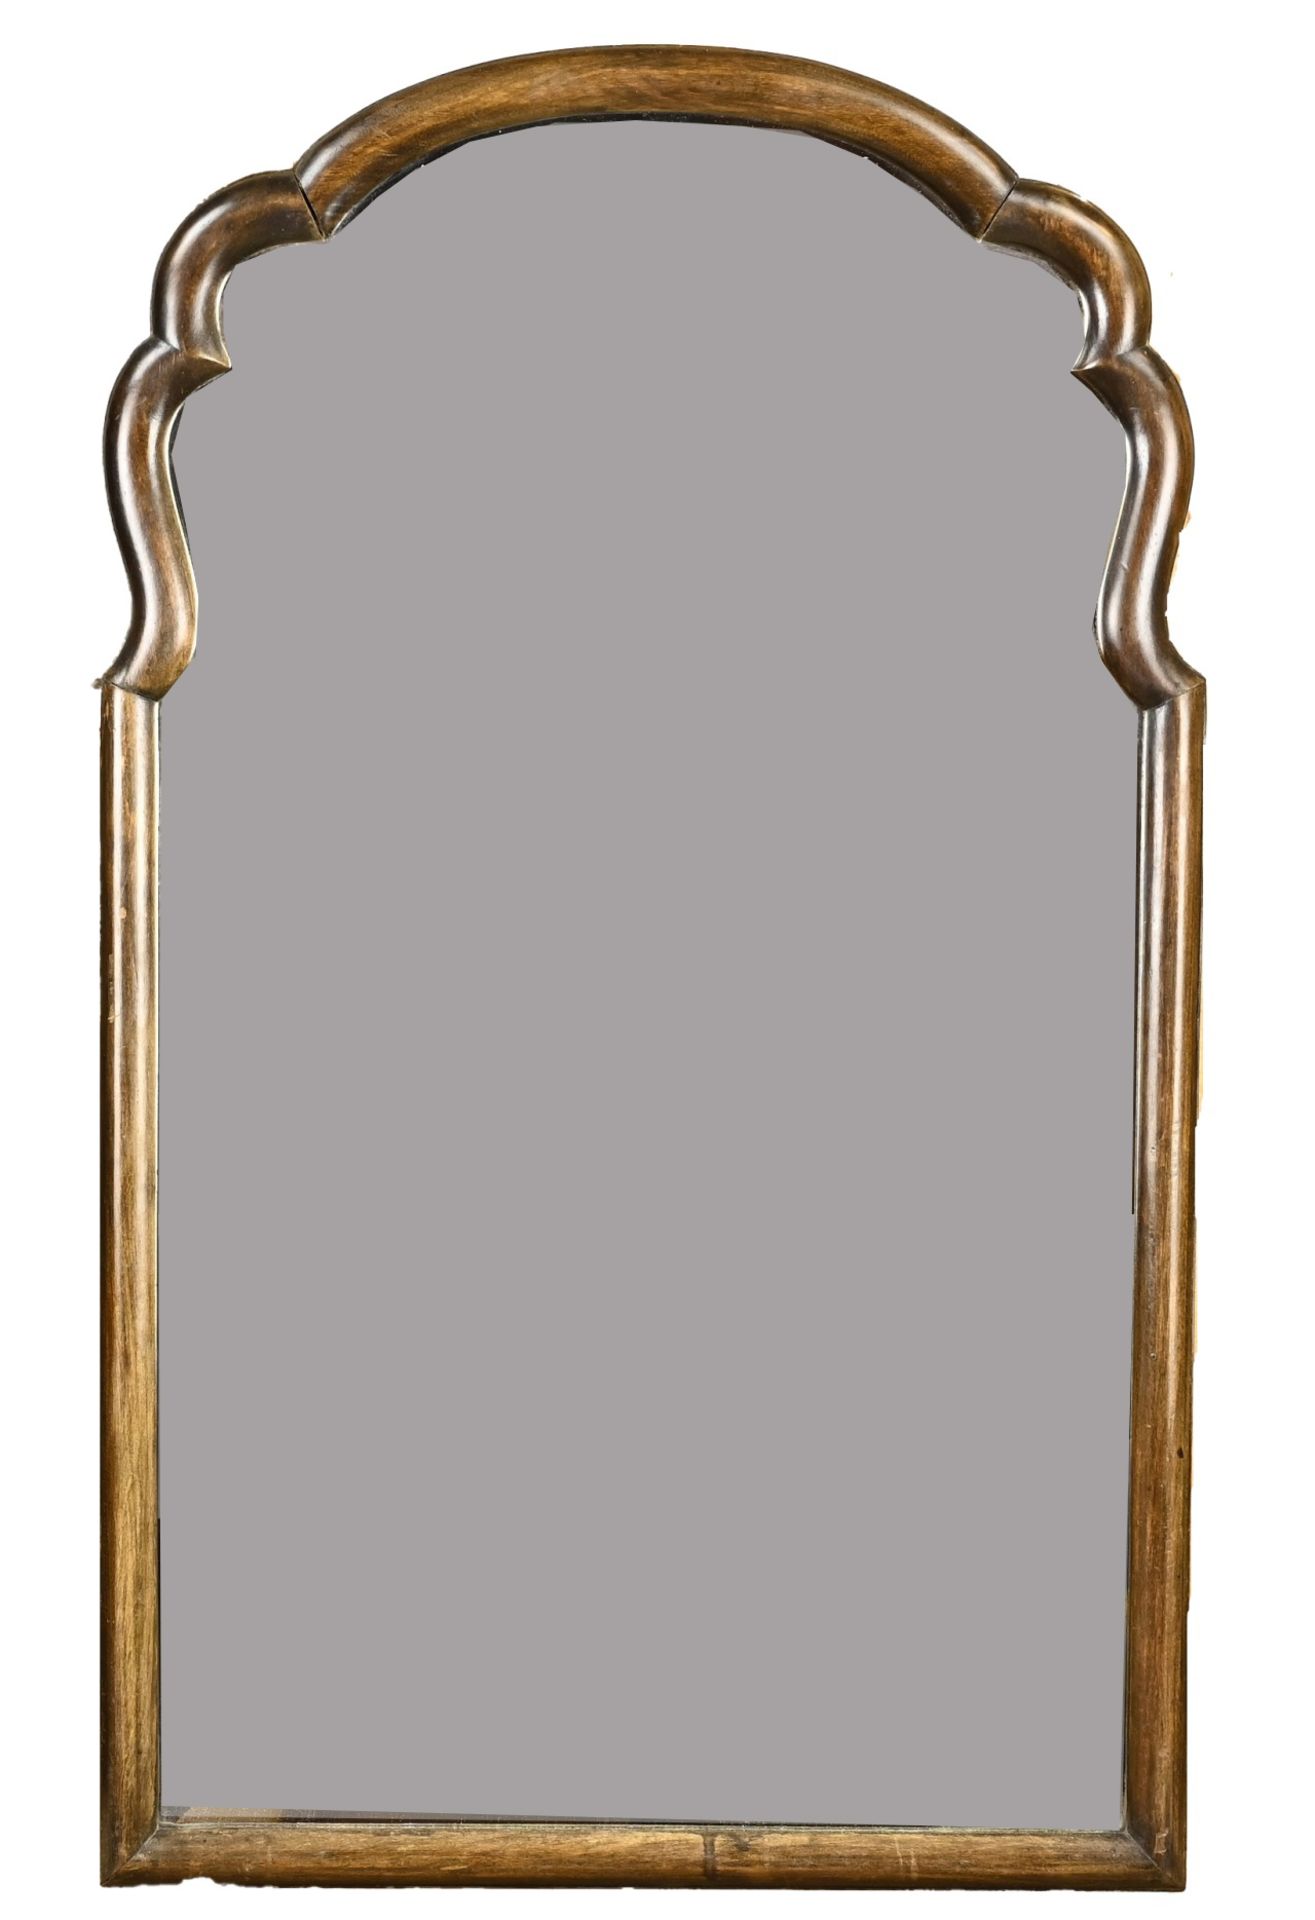 Soester mirror, 67 x 40 cm.